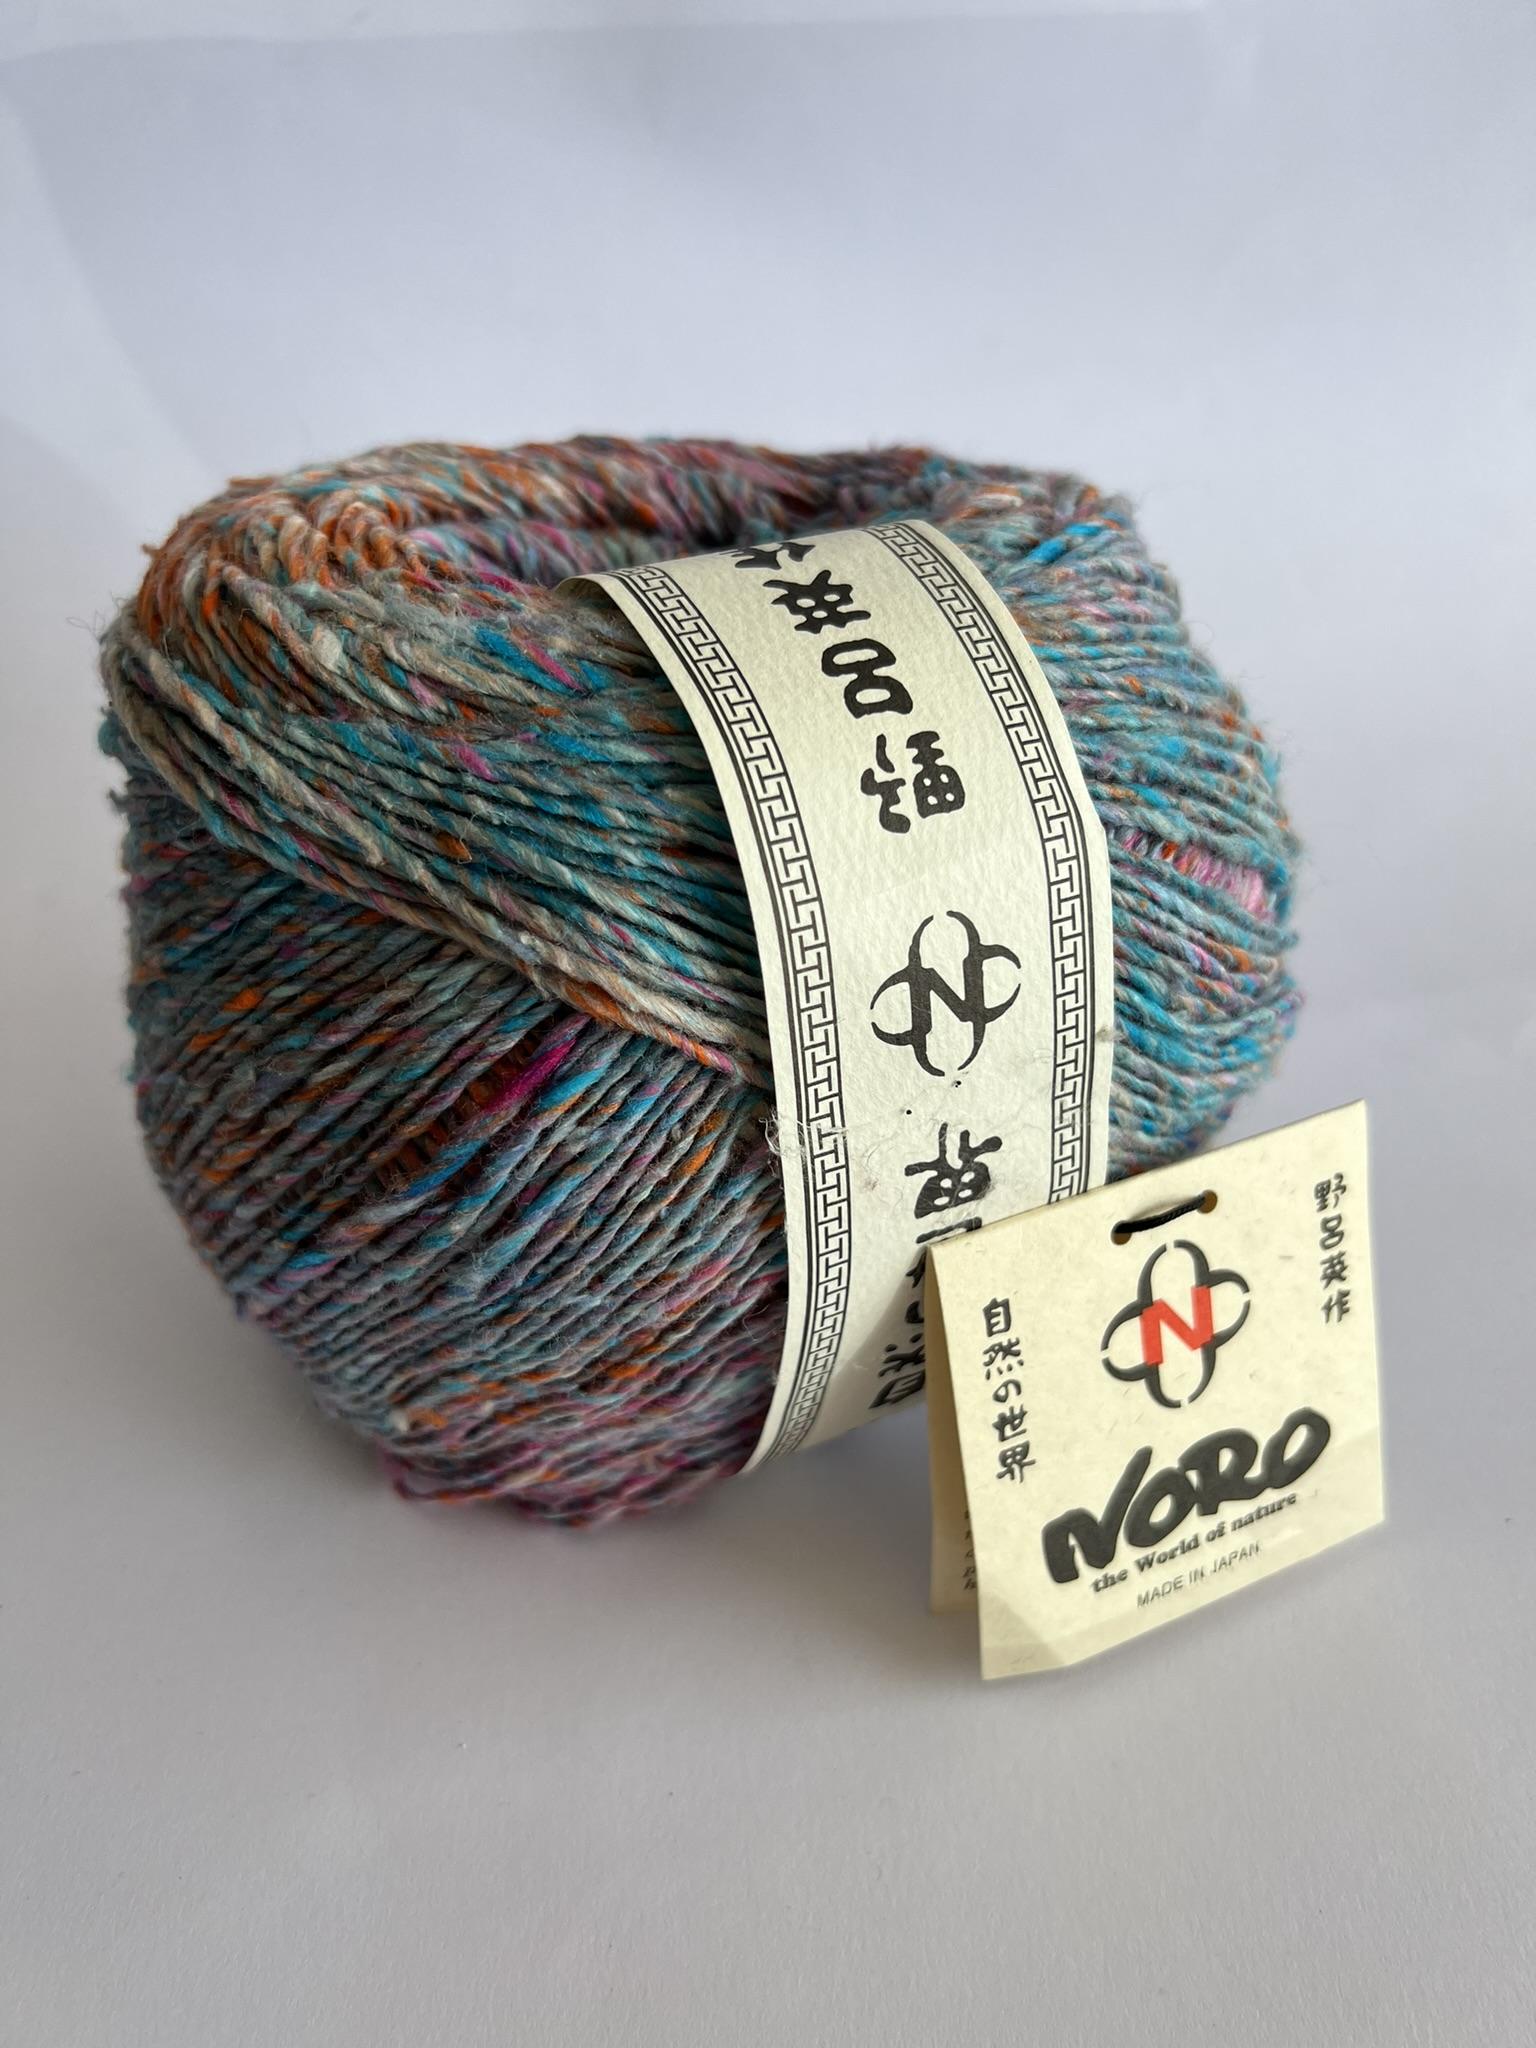 Noro Uchiwa - col. 2 — Little Woollie Makes Yarn Store